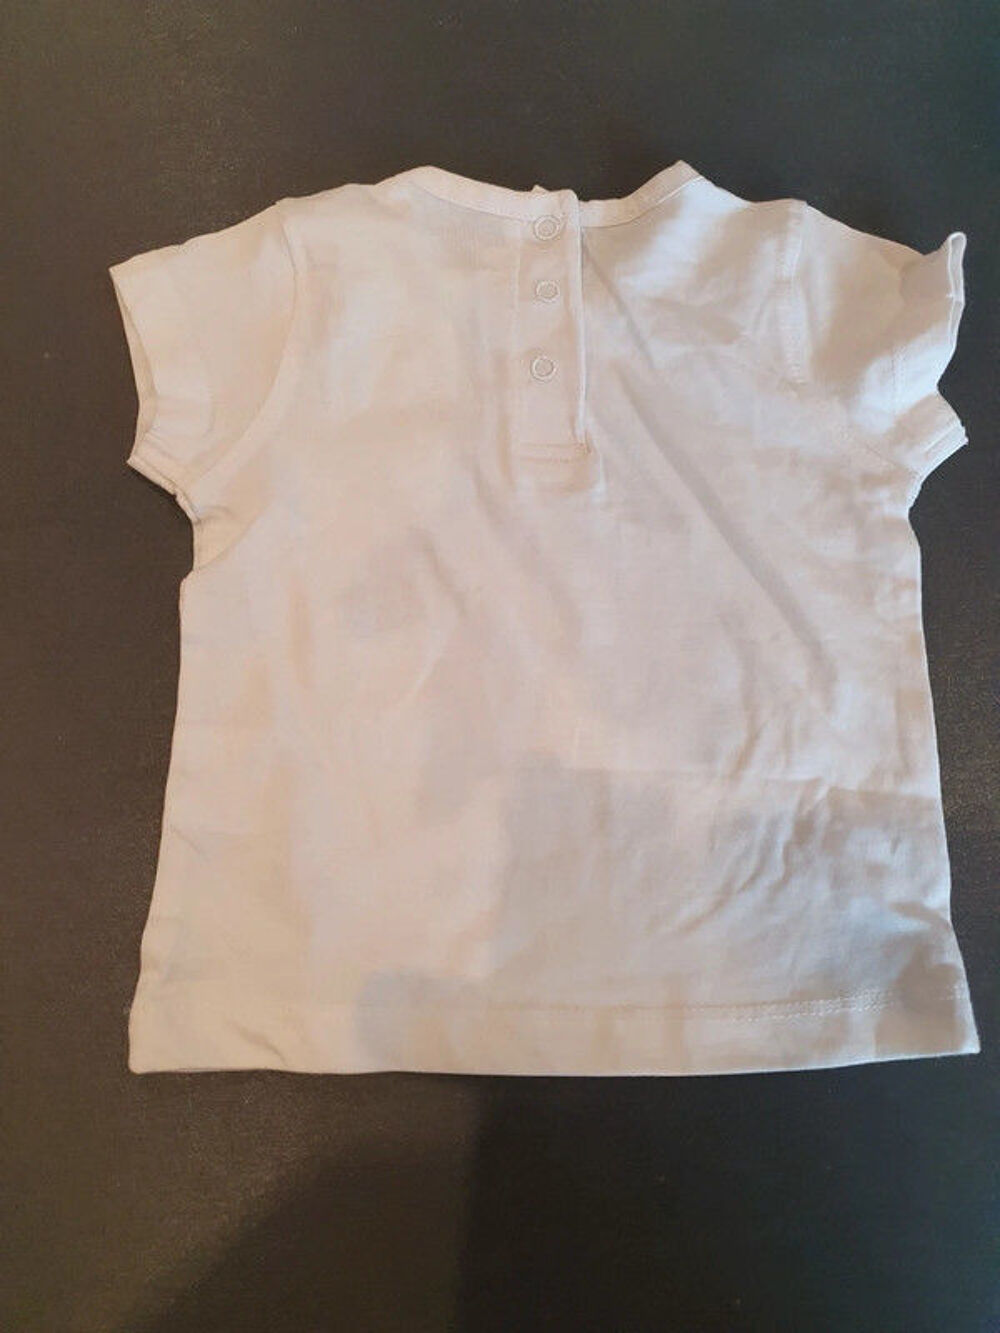 Tee shirt blanc avec chat - 12 mois Vtements enfants